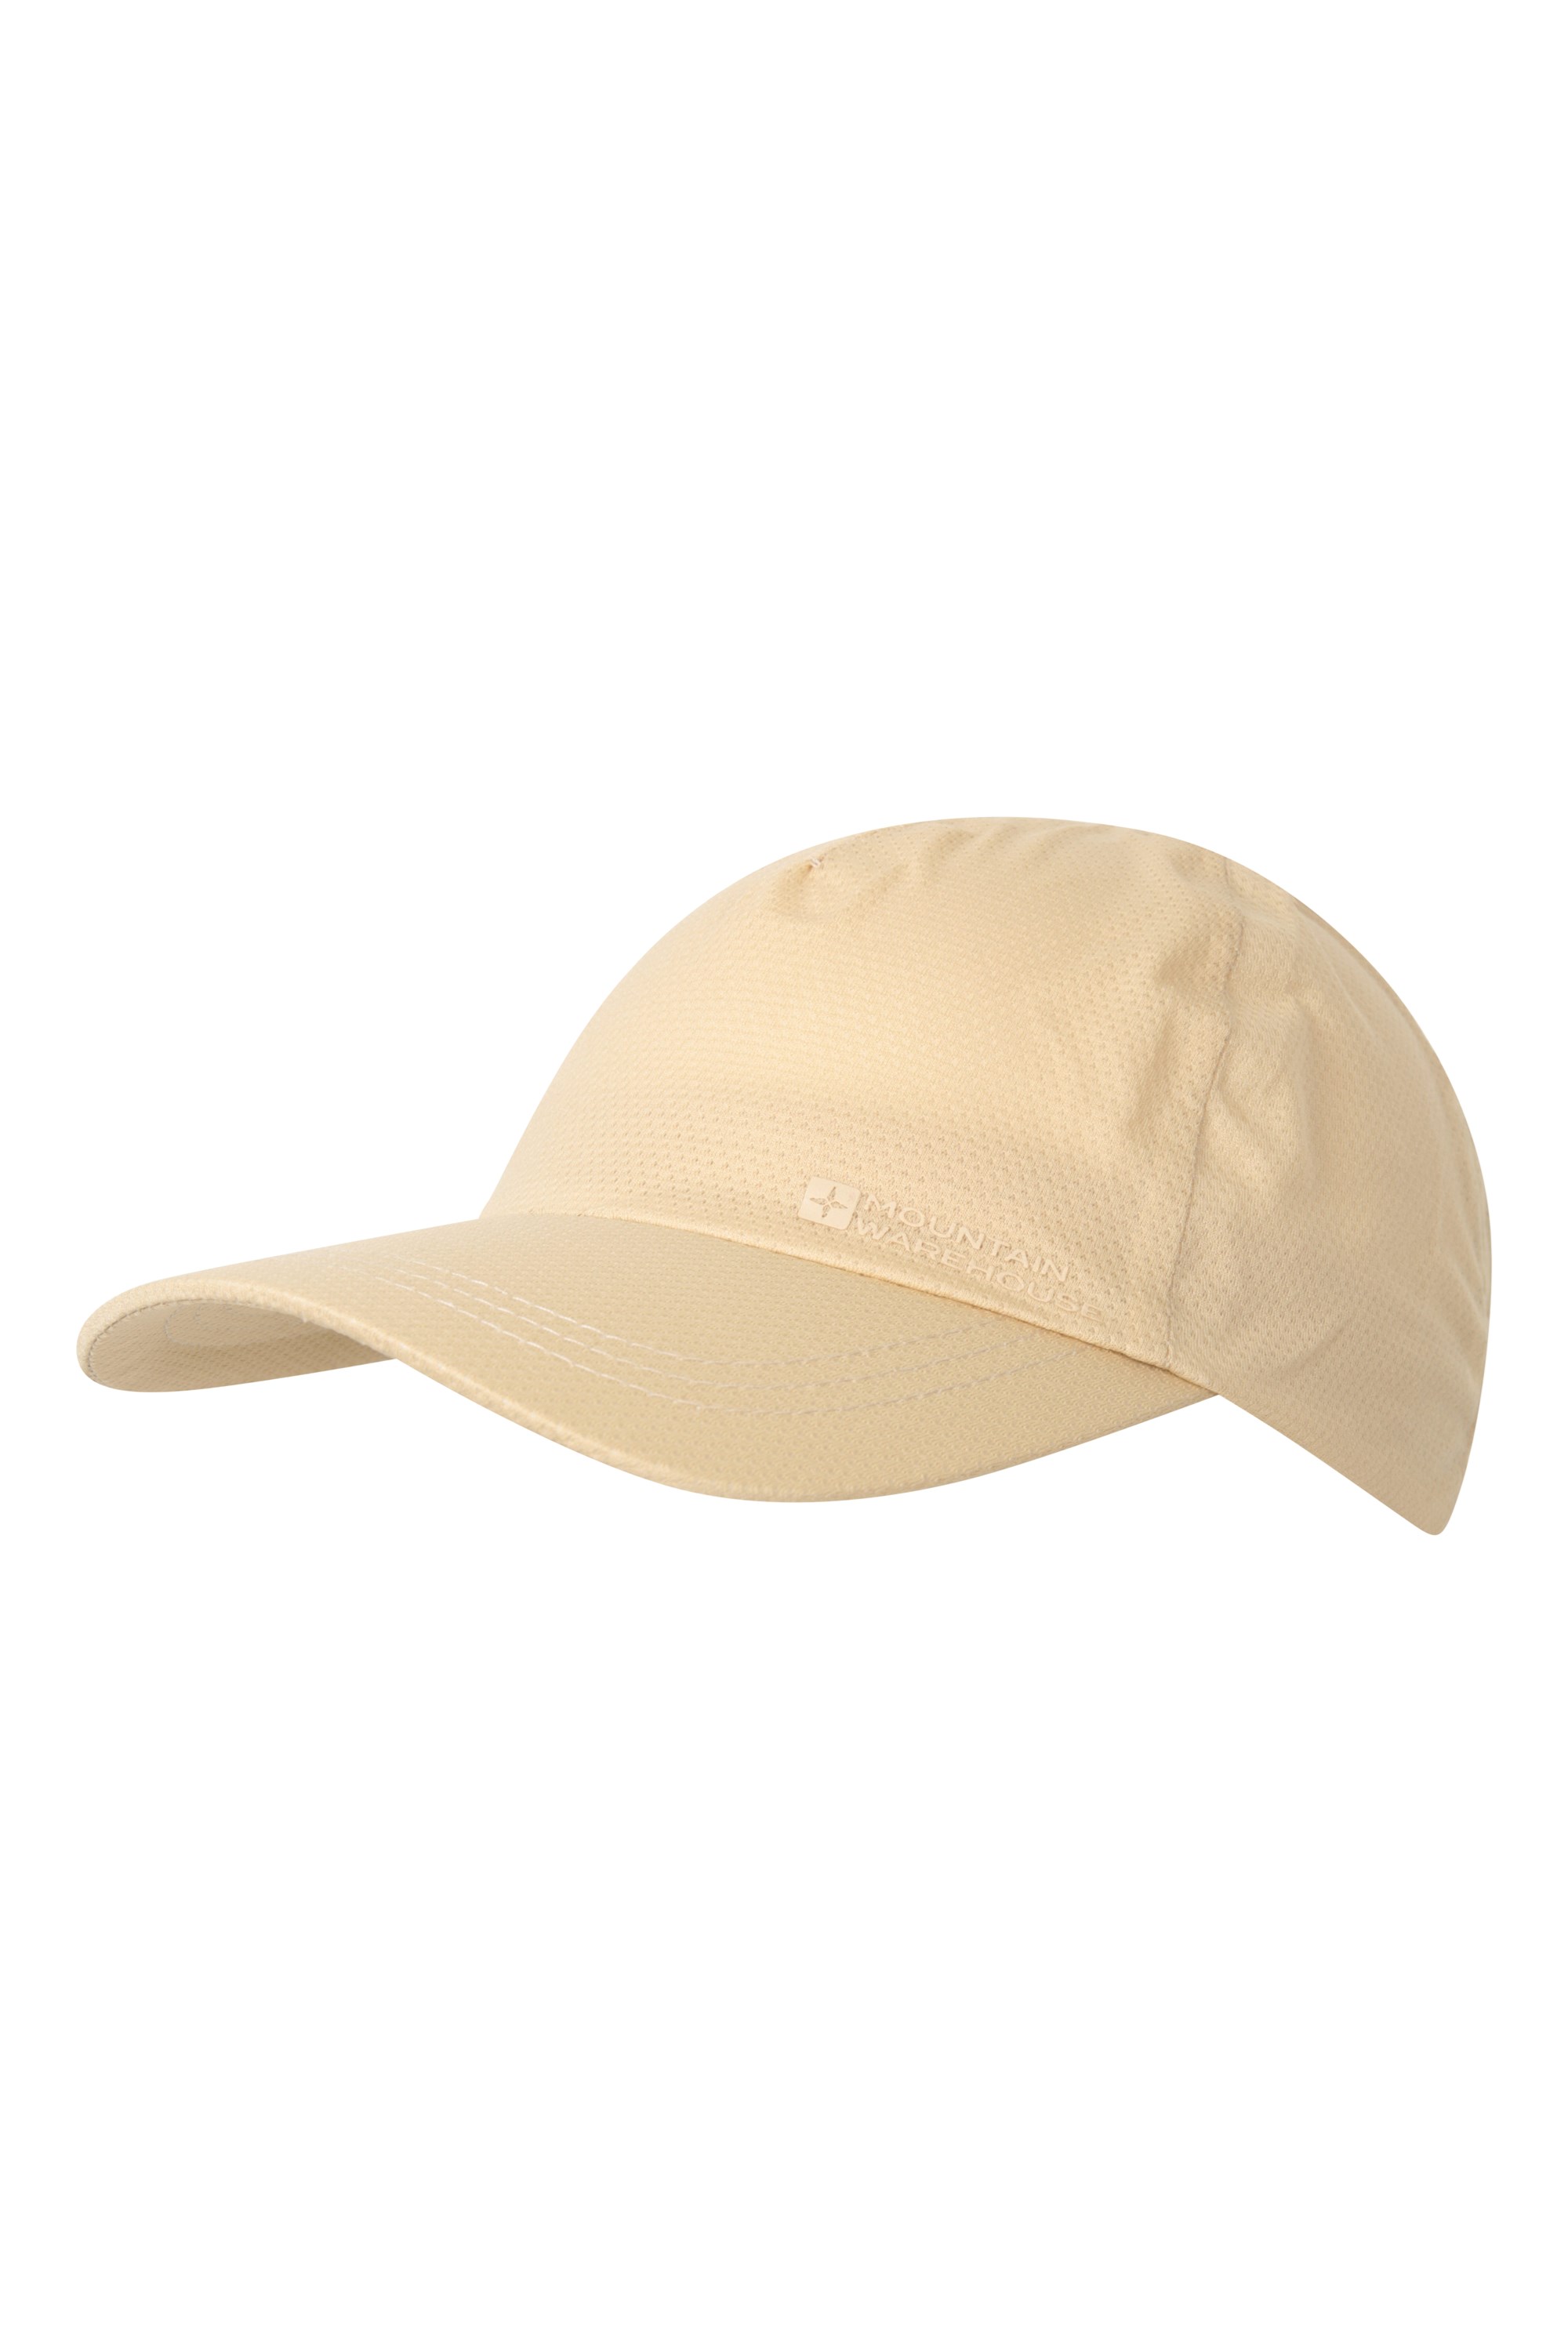 Waterproof Hats & Caps  A Wide Range For Men & Women